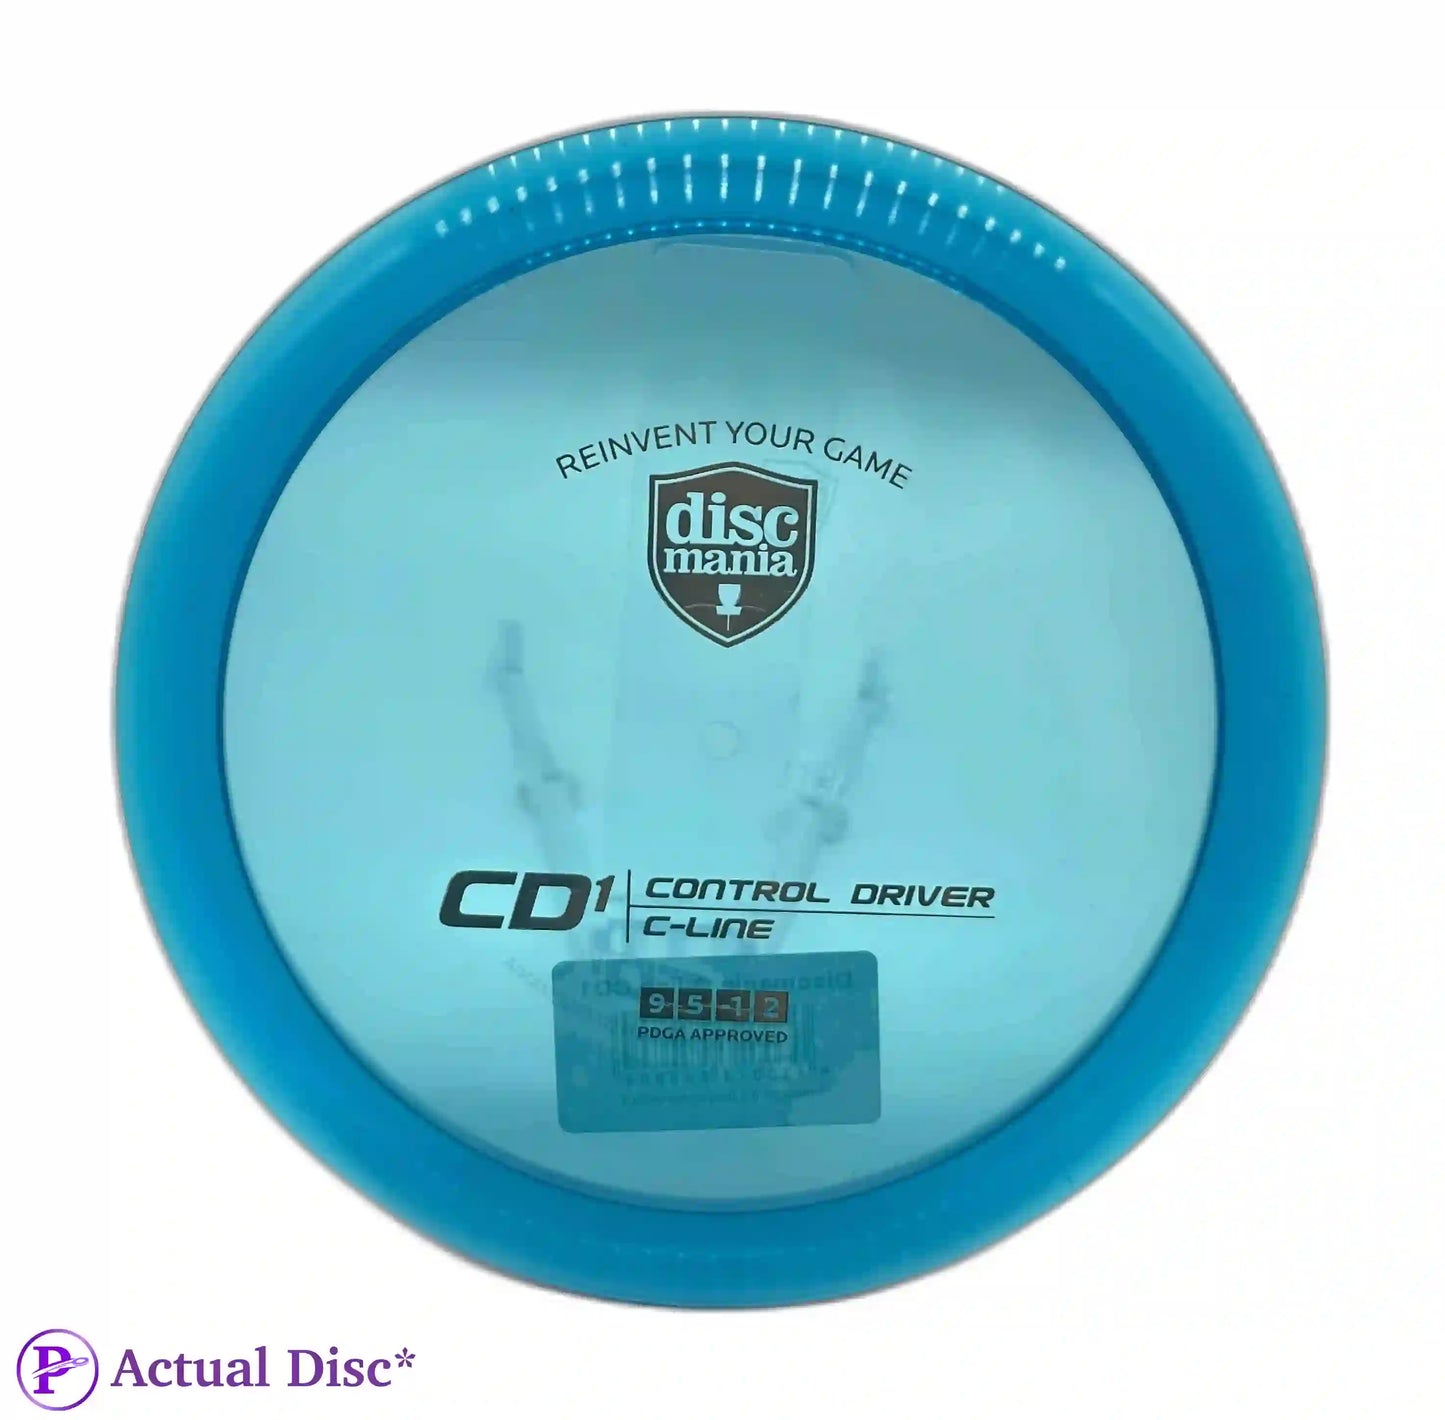 C-Line CD1